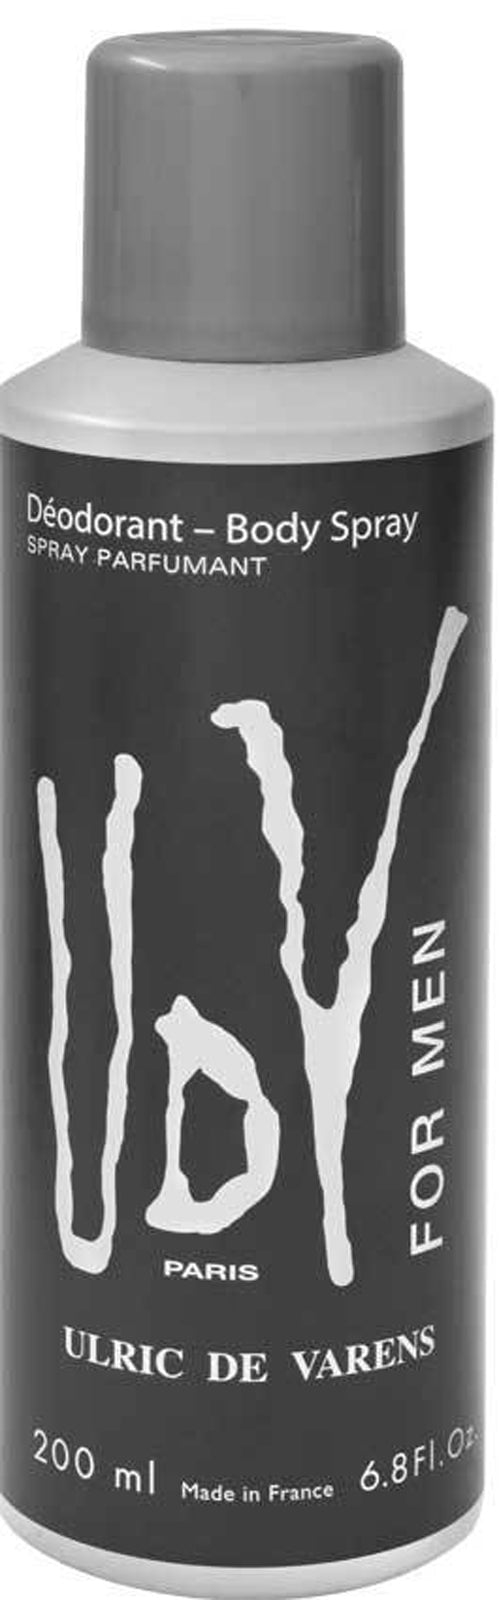 Ulric De Varens UDV Deodorant Body Spray for Men 200ml Payday Deals